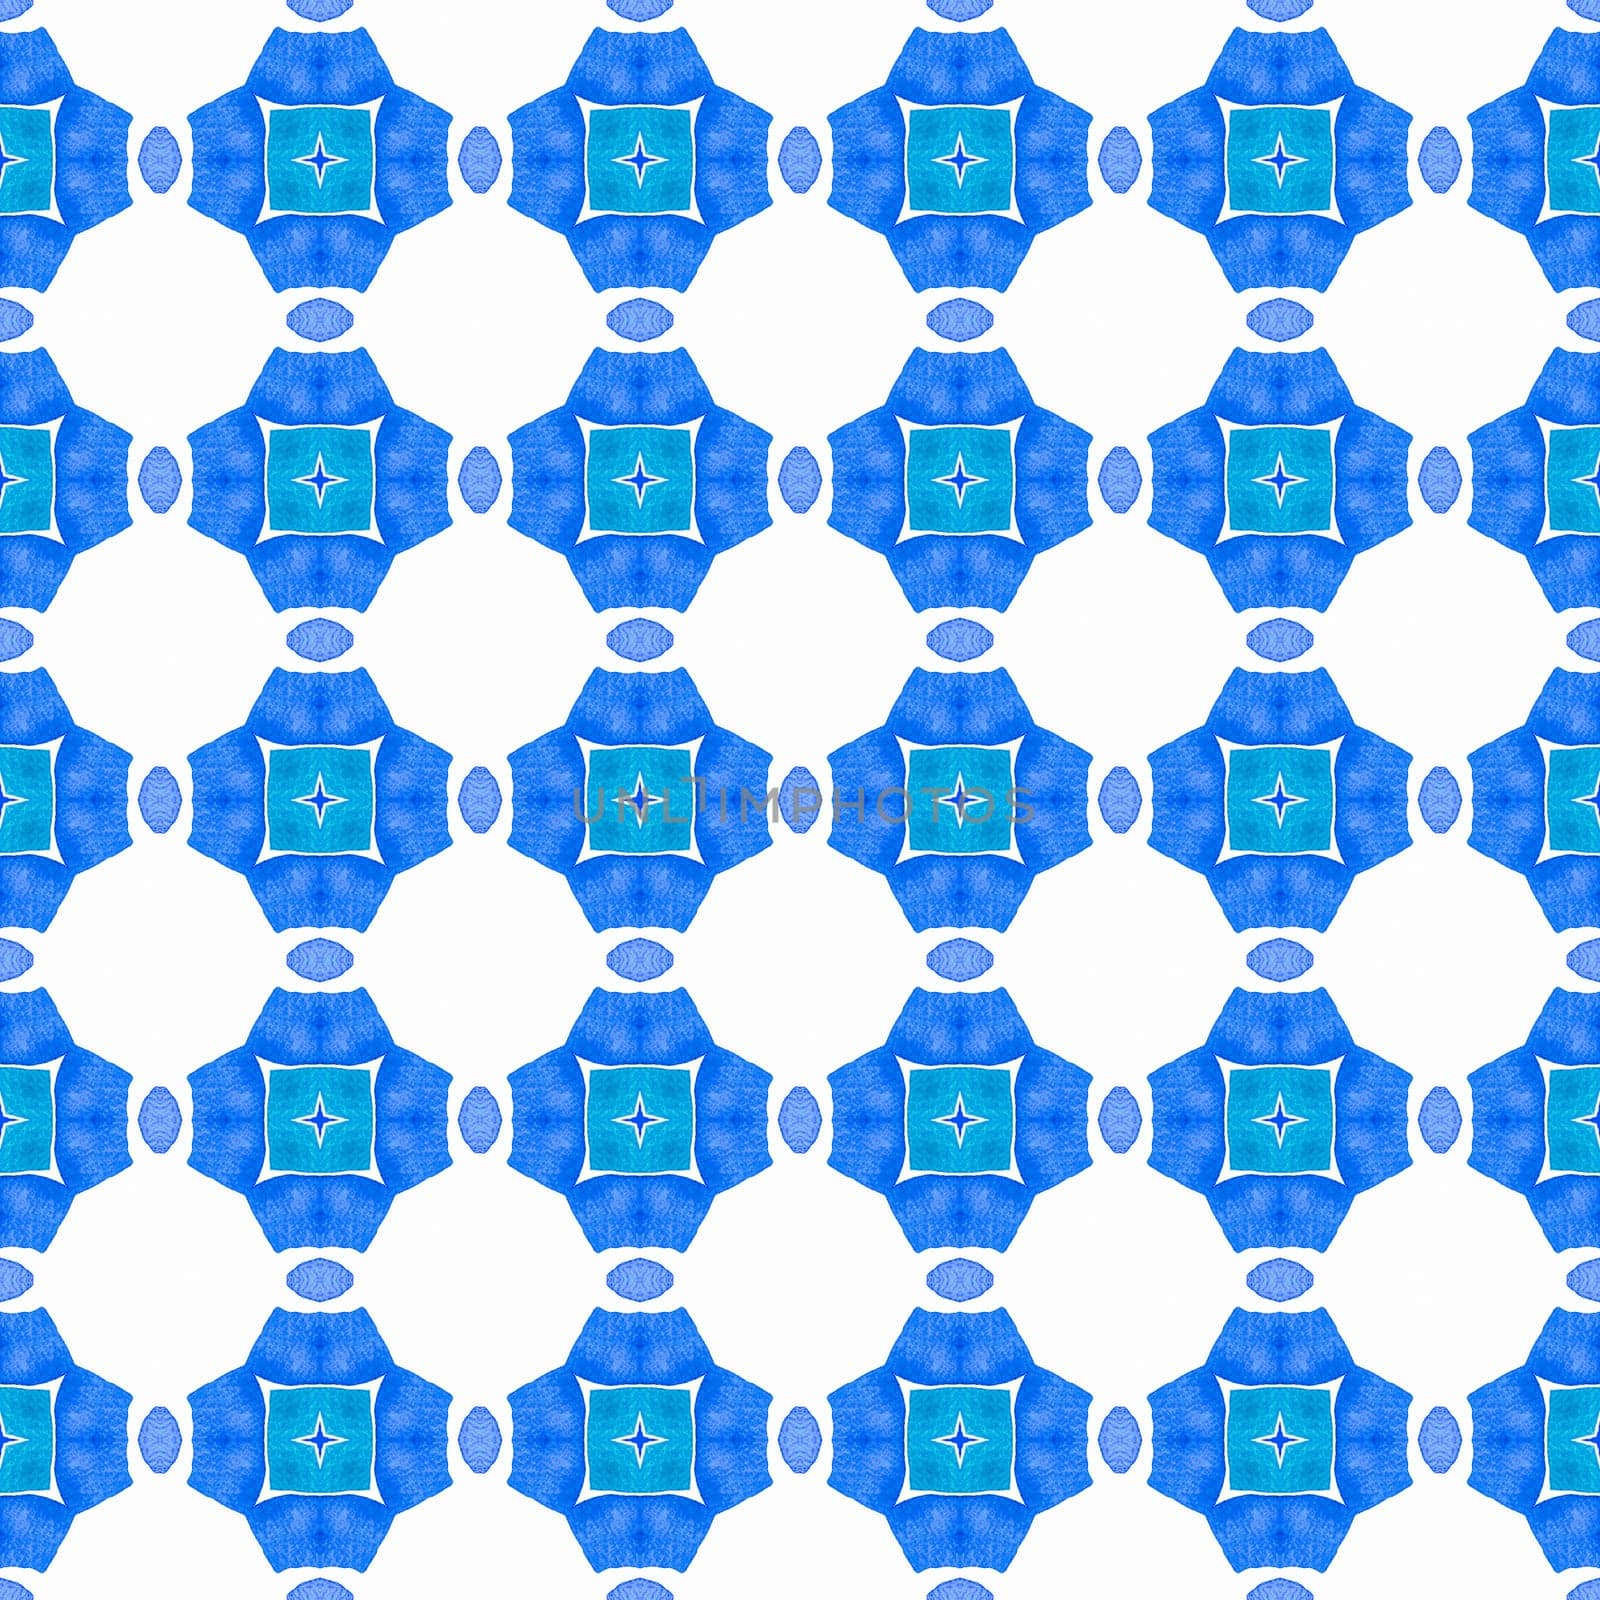 Organic tile. Blue graceful boho chic summer by beginagain